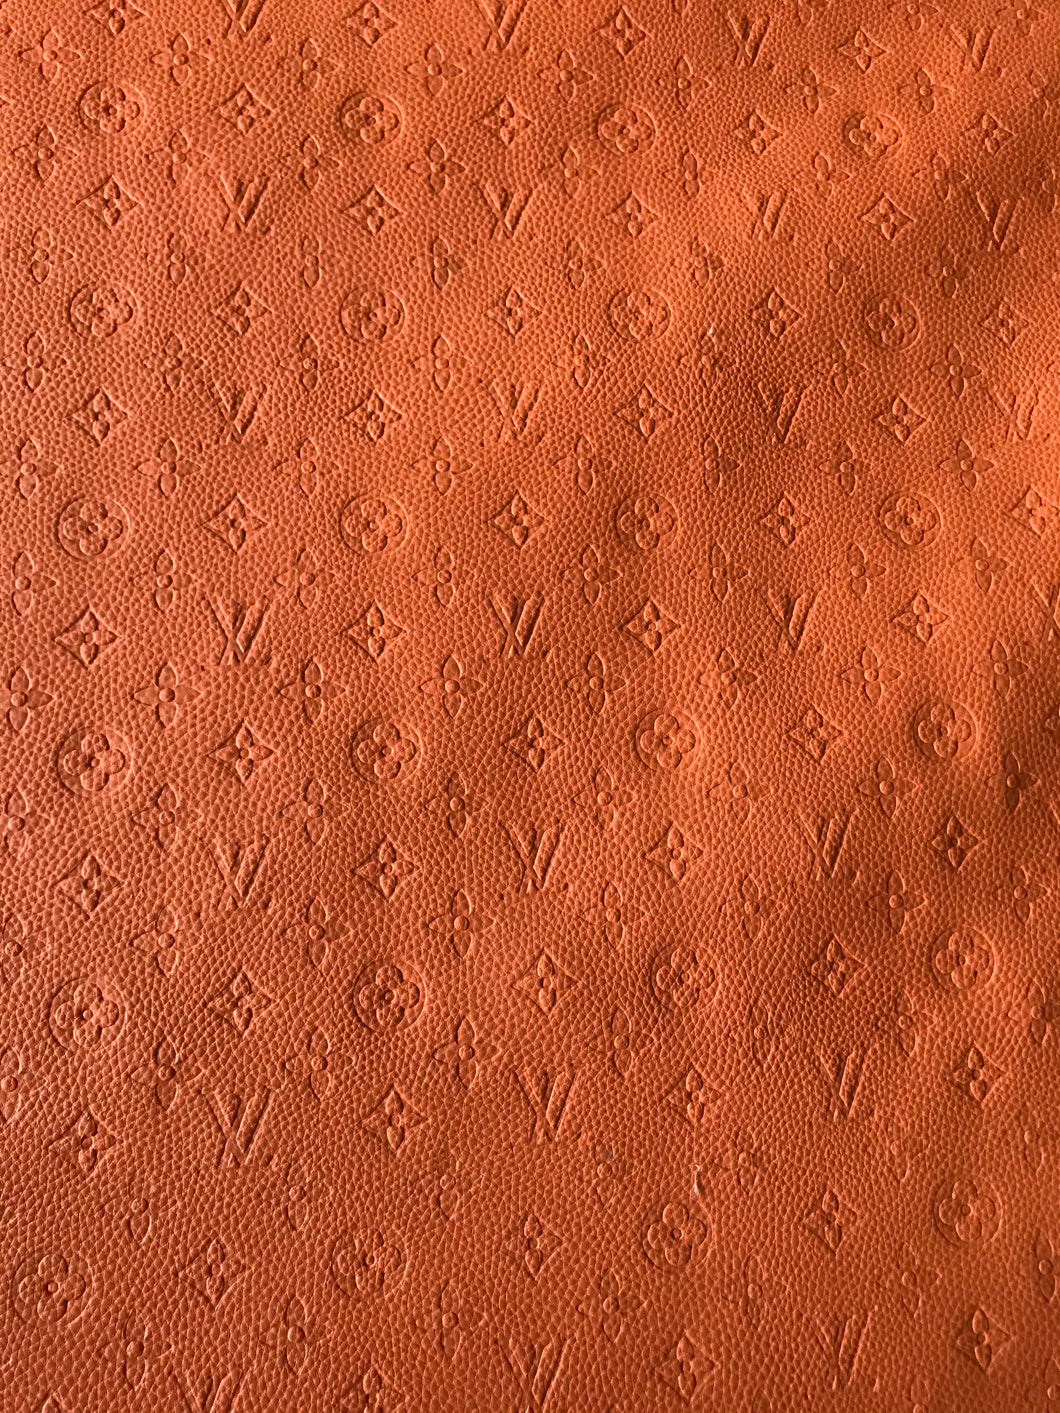 Soft Orange Embossed LV Leather Fabric Vinyl for Shoe Customs crafting